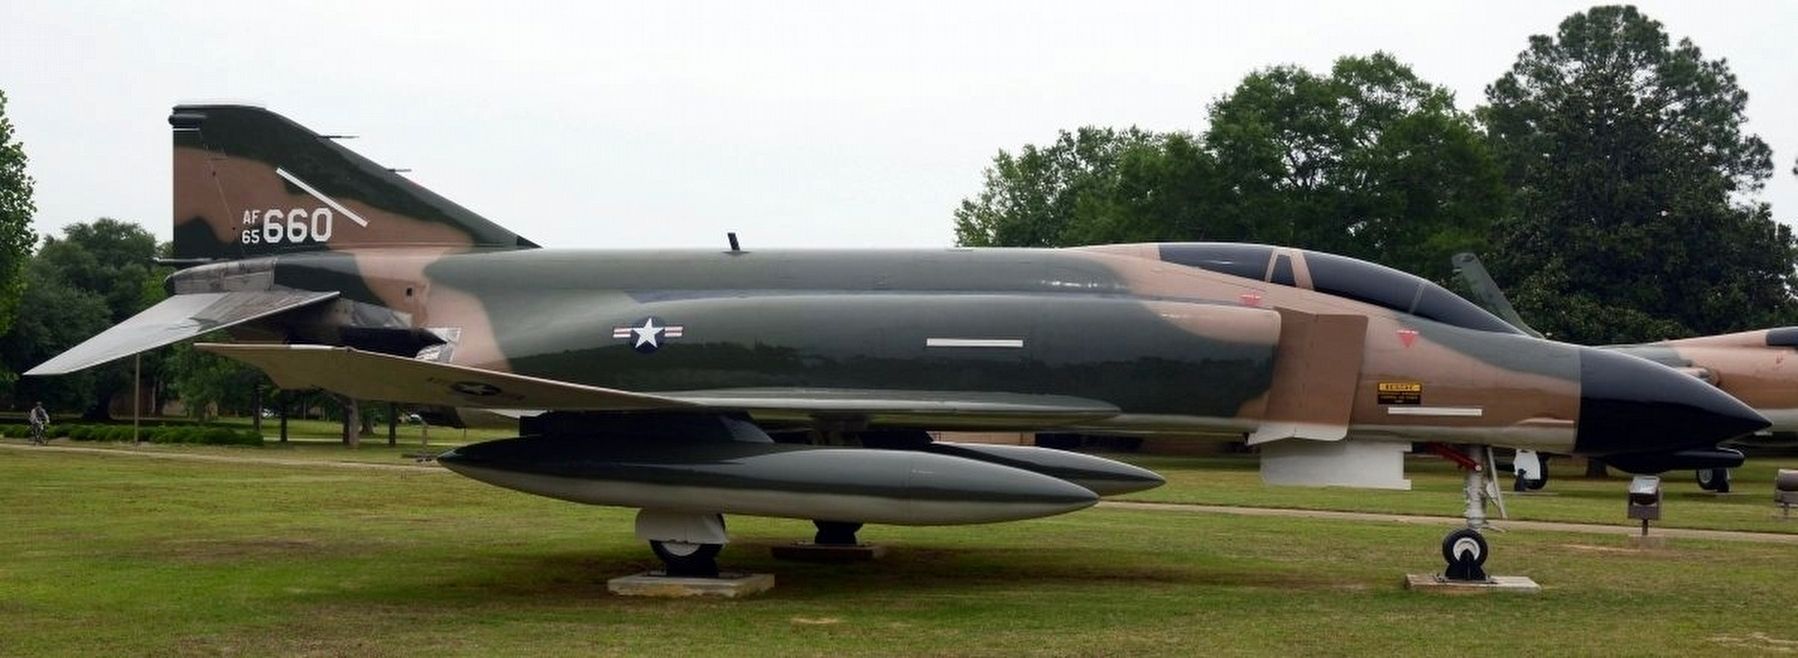 McDonnell F-4D Phantom II 65-0660 4 image. Click for full size.